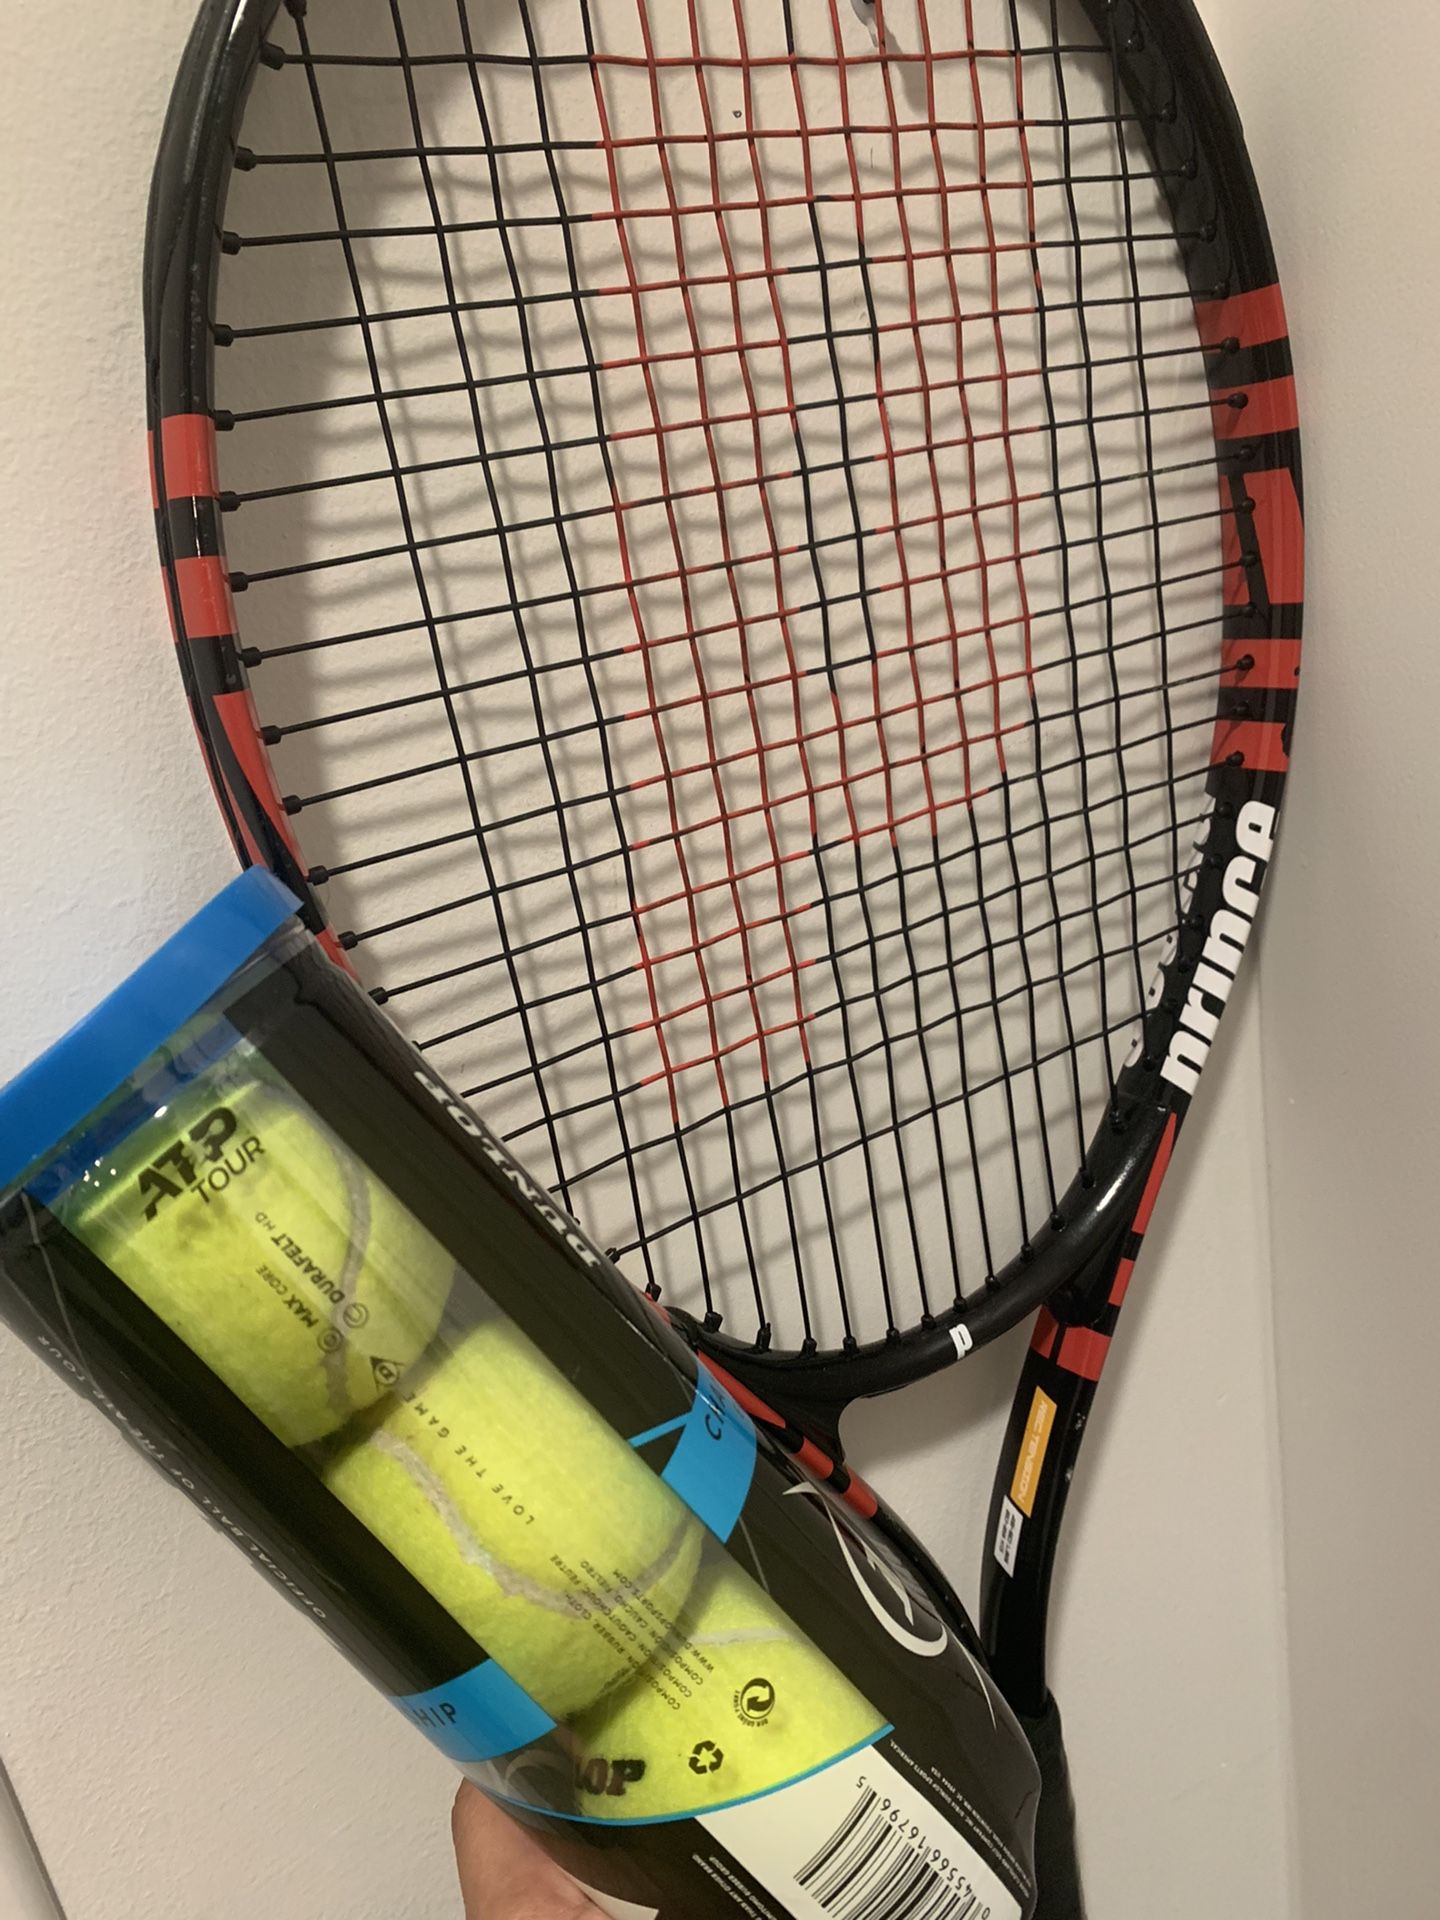 Tennis Balls and racket